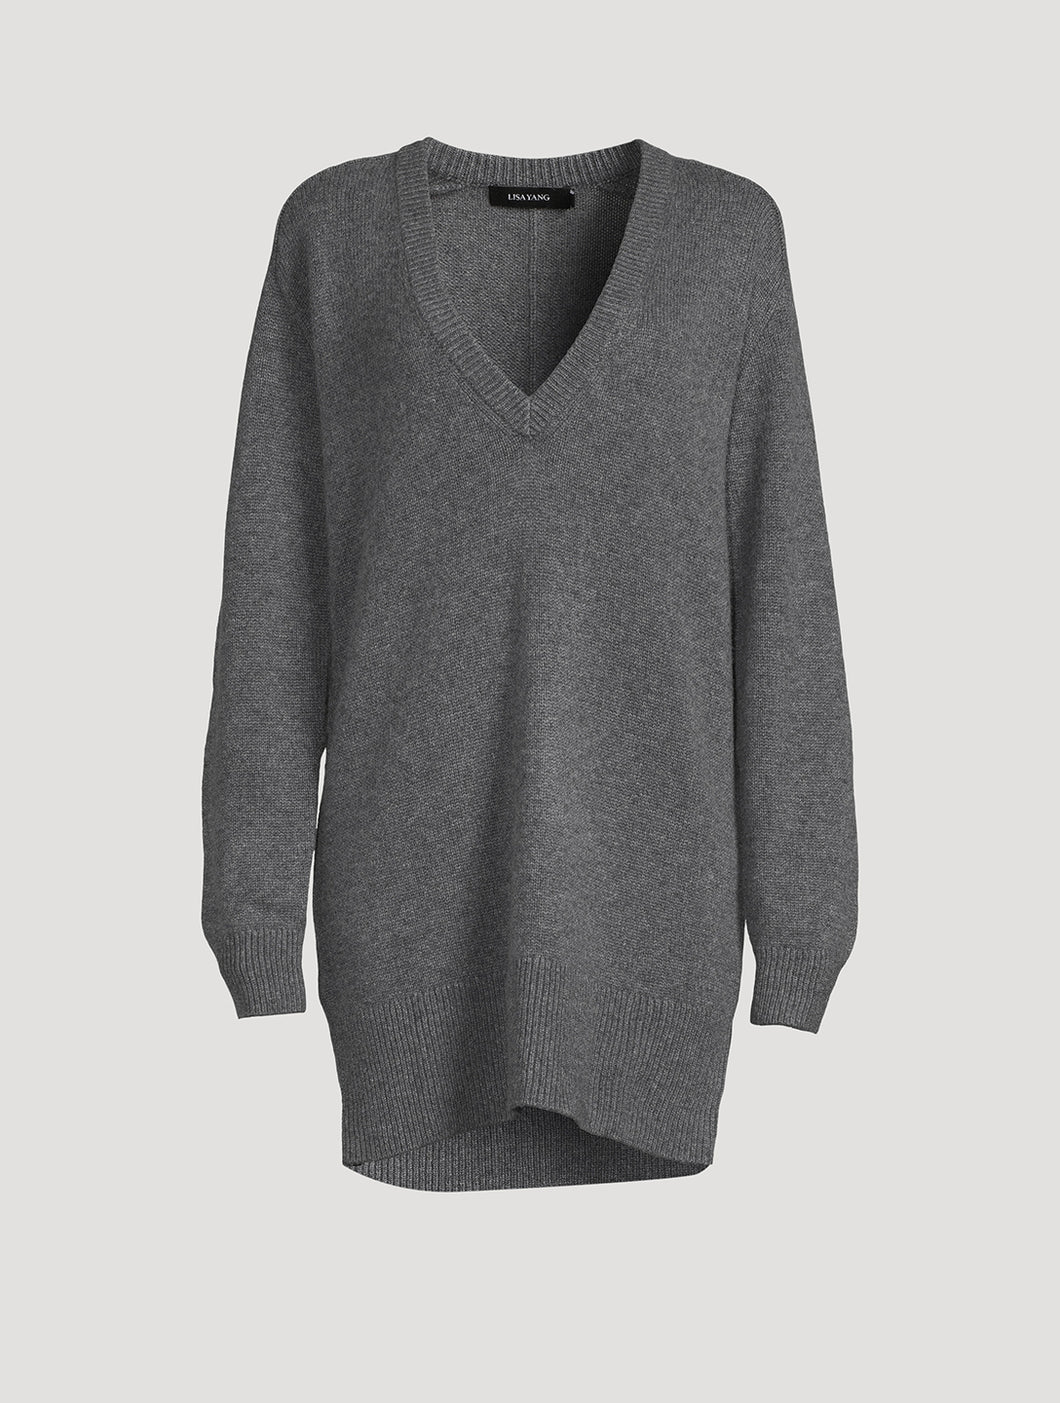 Danielle Cashmere Sweater Graphite-Knitwear-Lisa Yang-S-M-AKAT studio